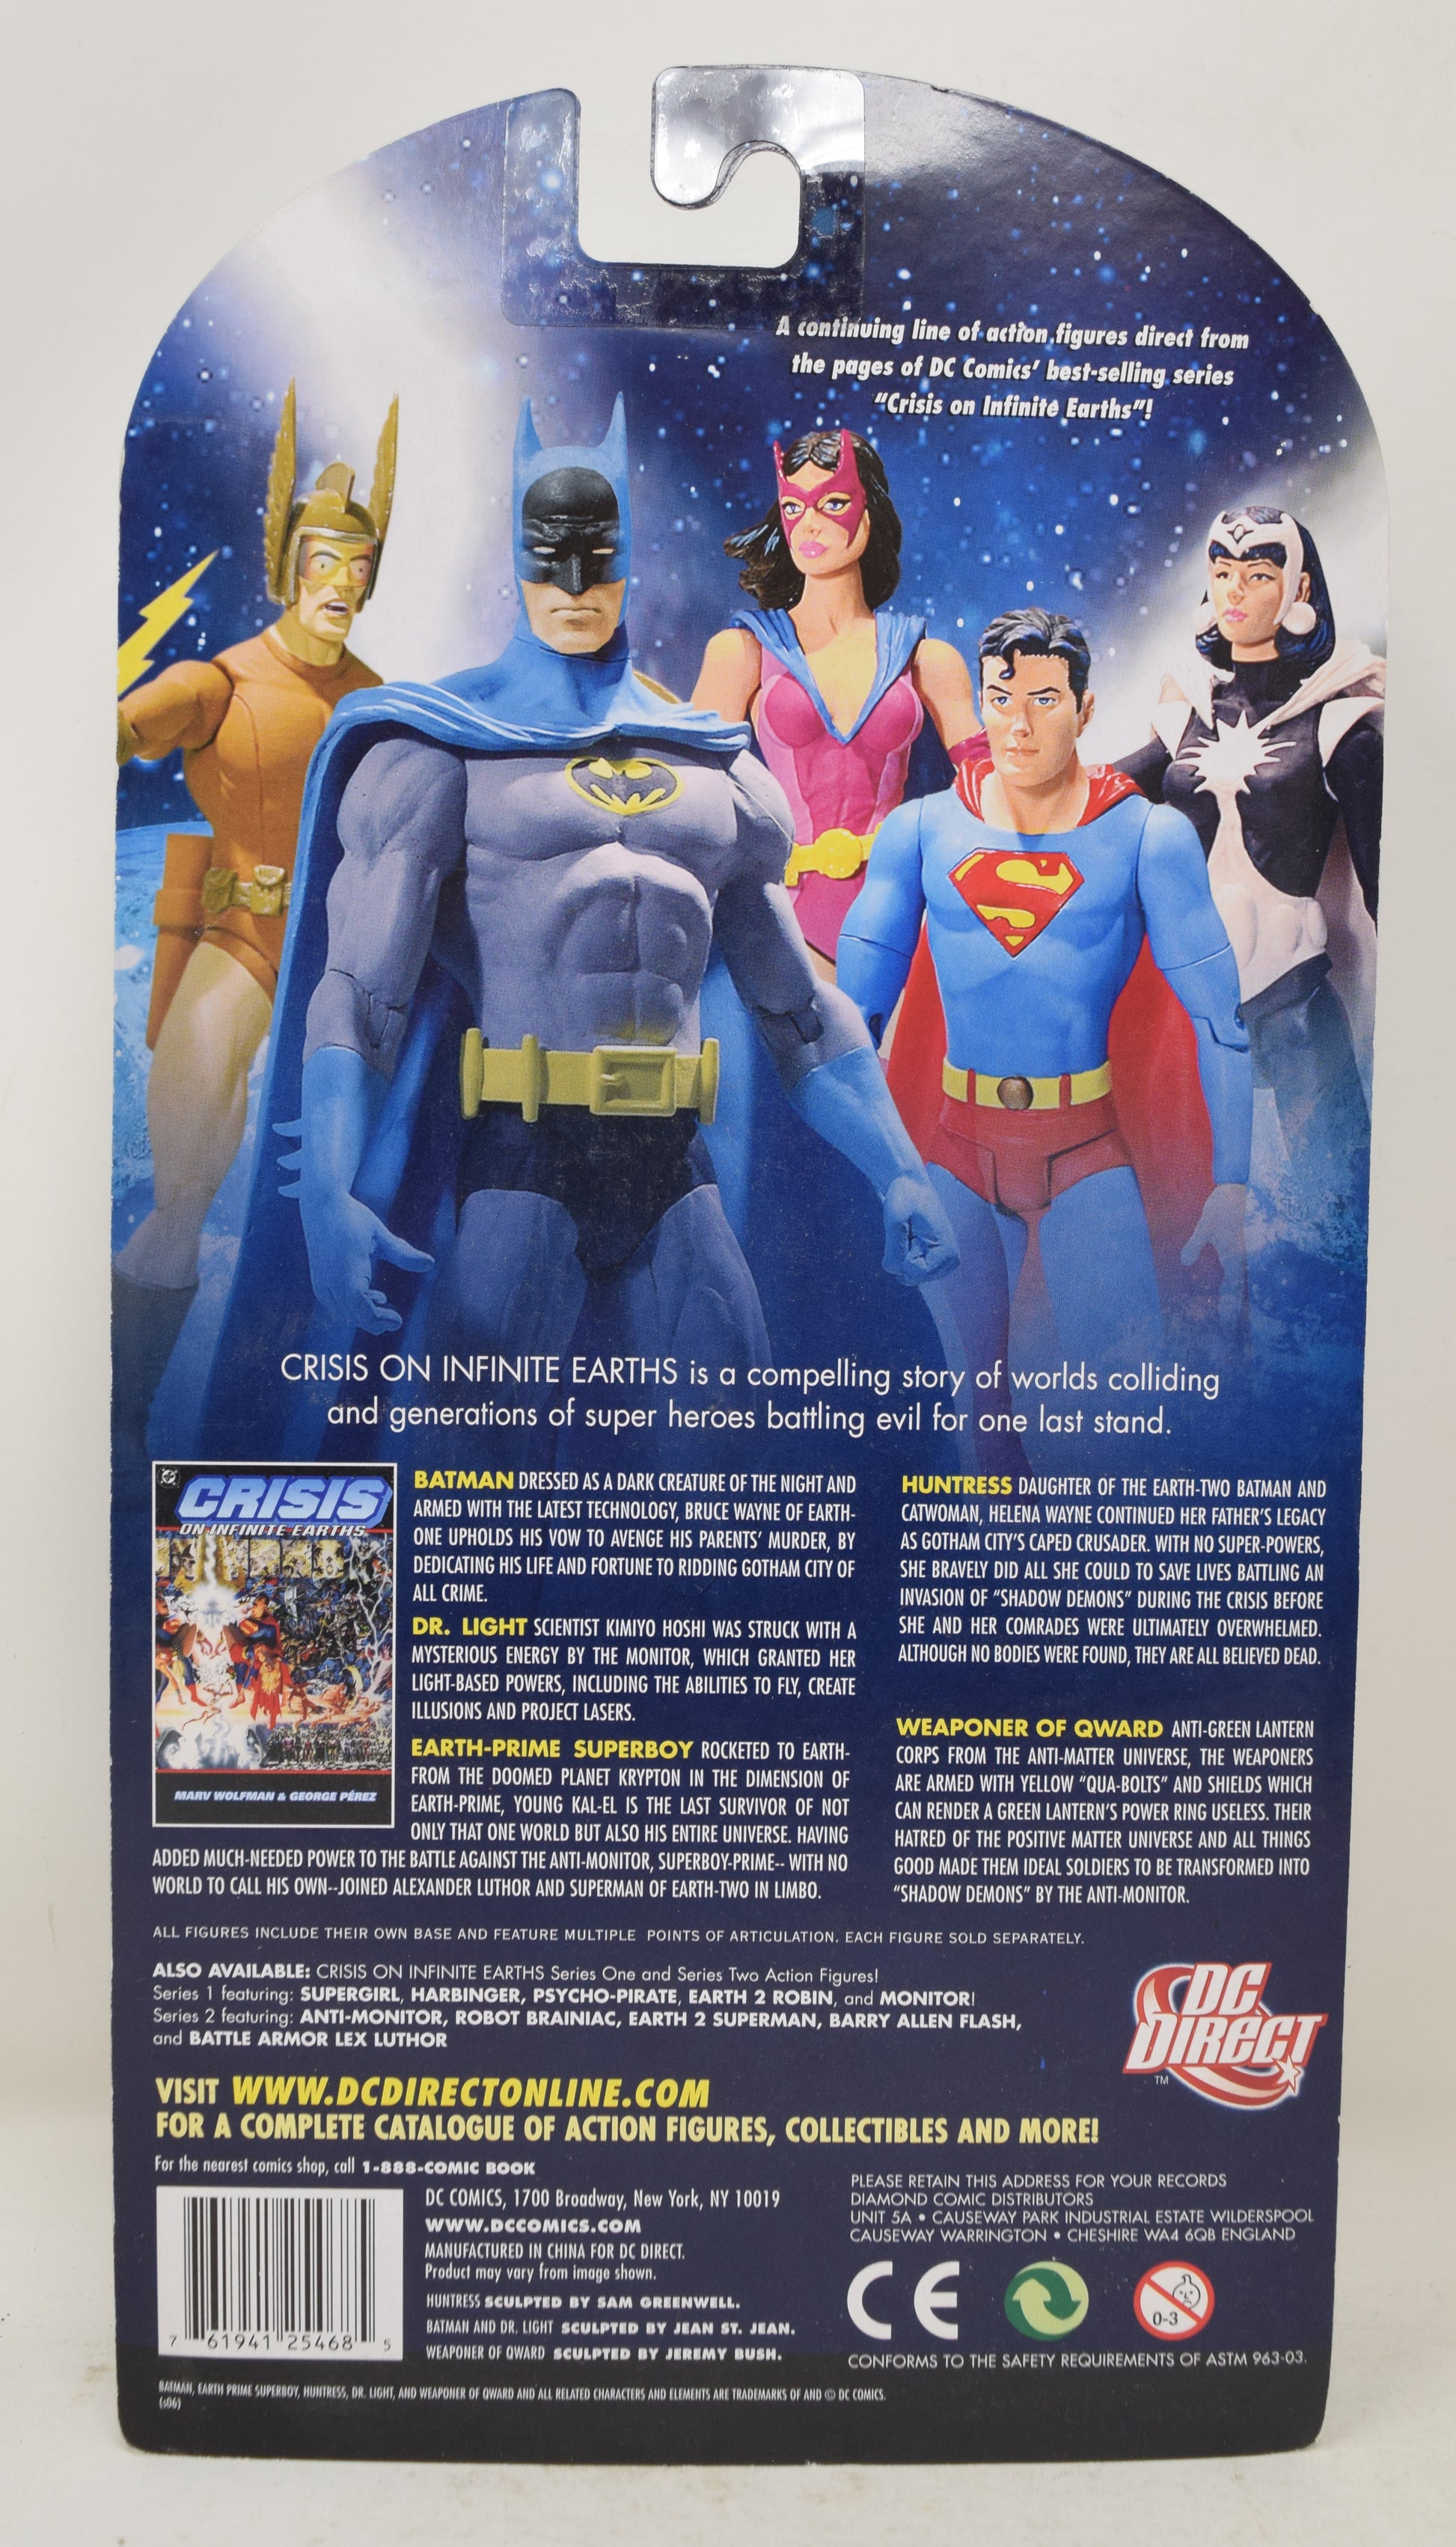 Batman Collectible Comic Figurines for sale